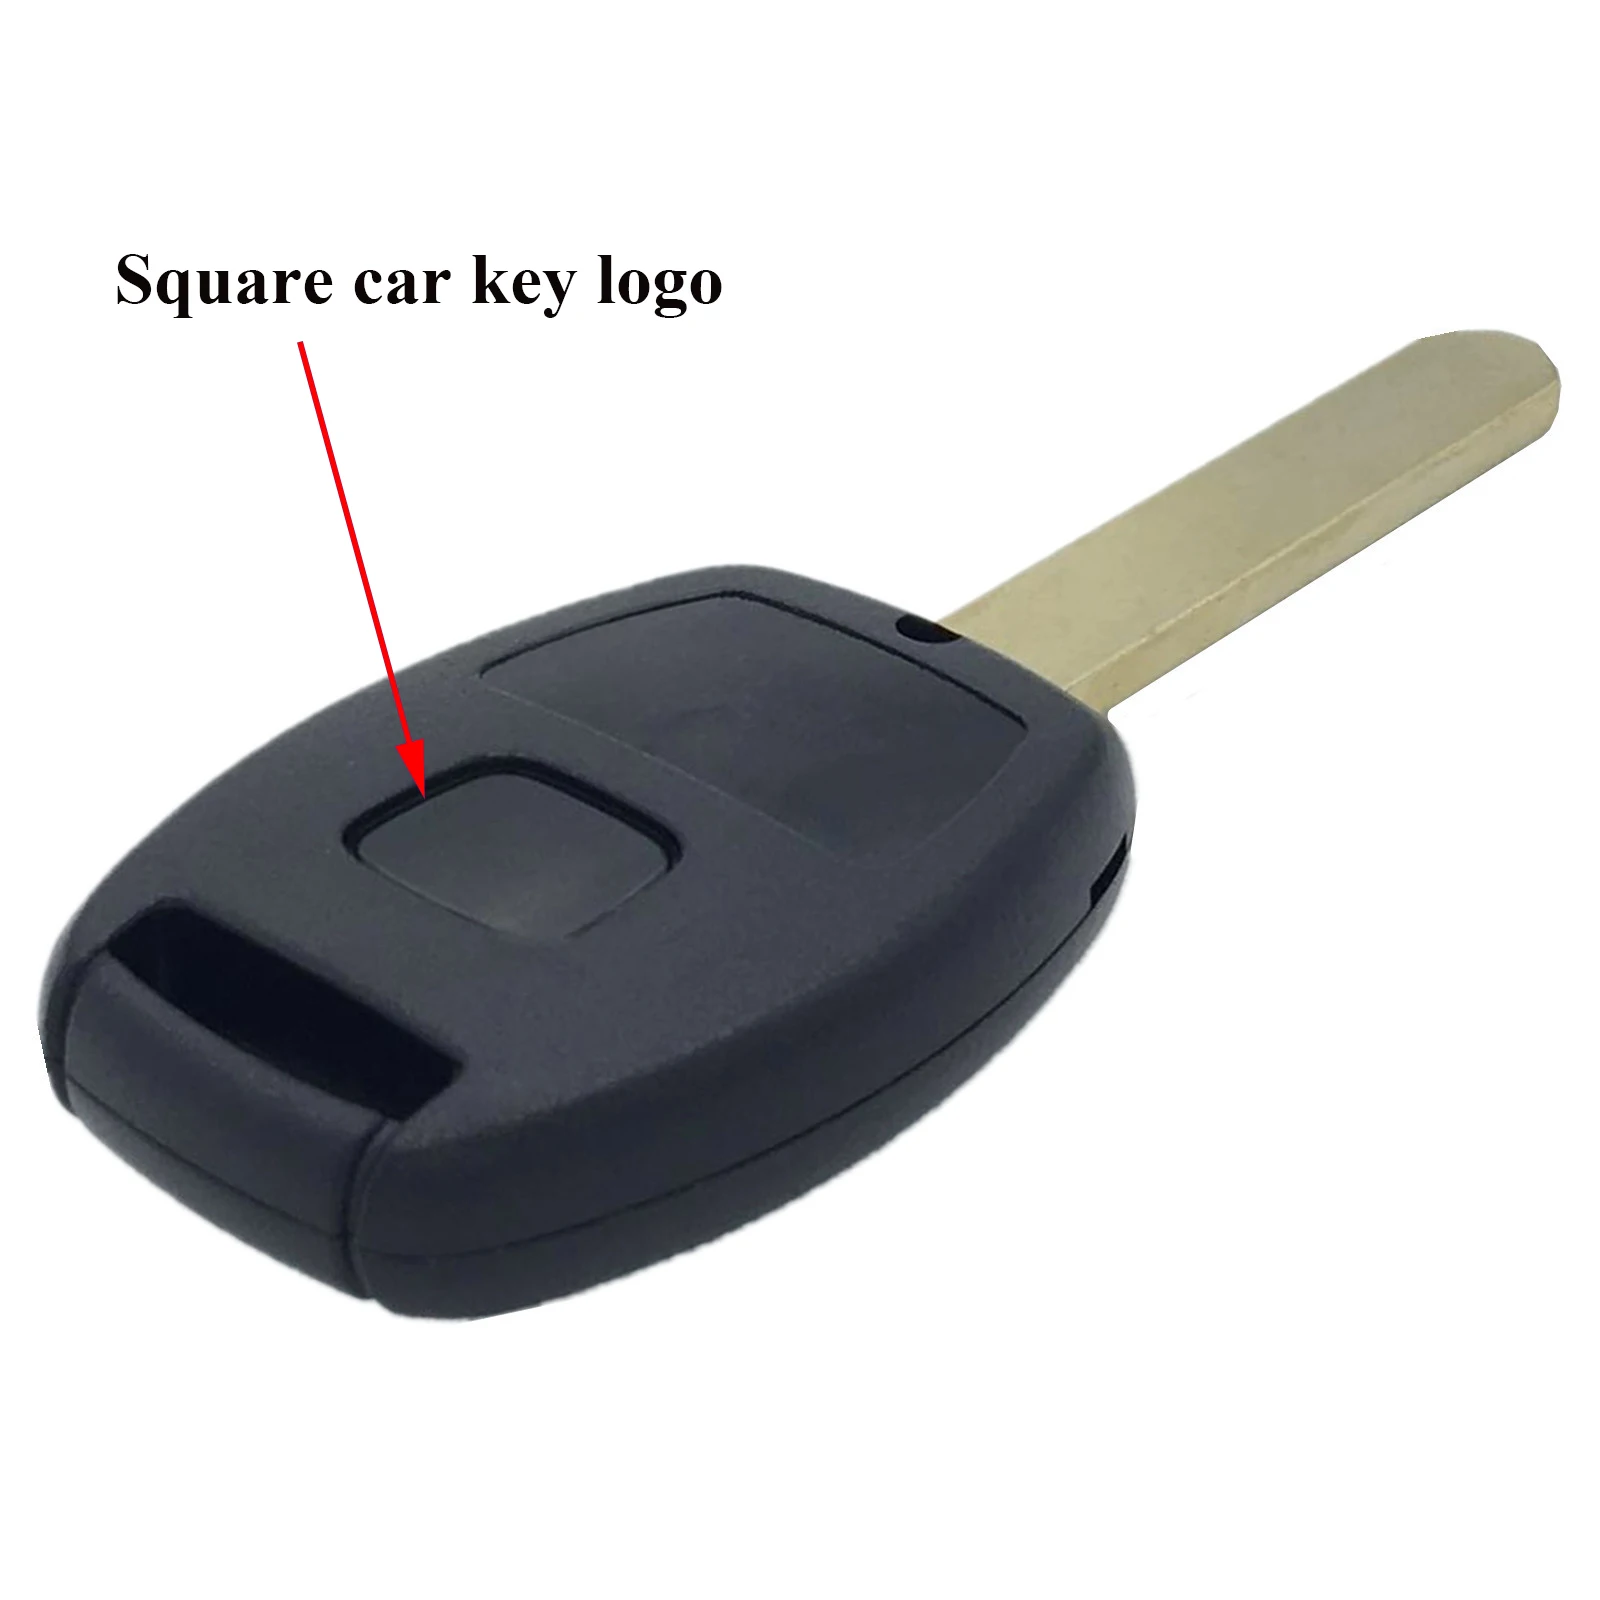 100piece Wholesale price car key emblem, 13X11mm Square size Irregular Car key logo